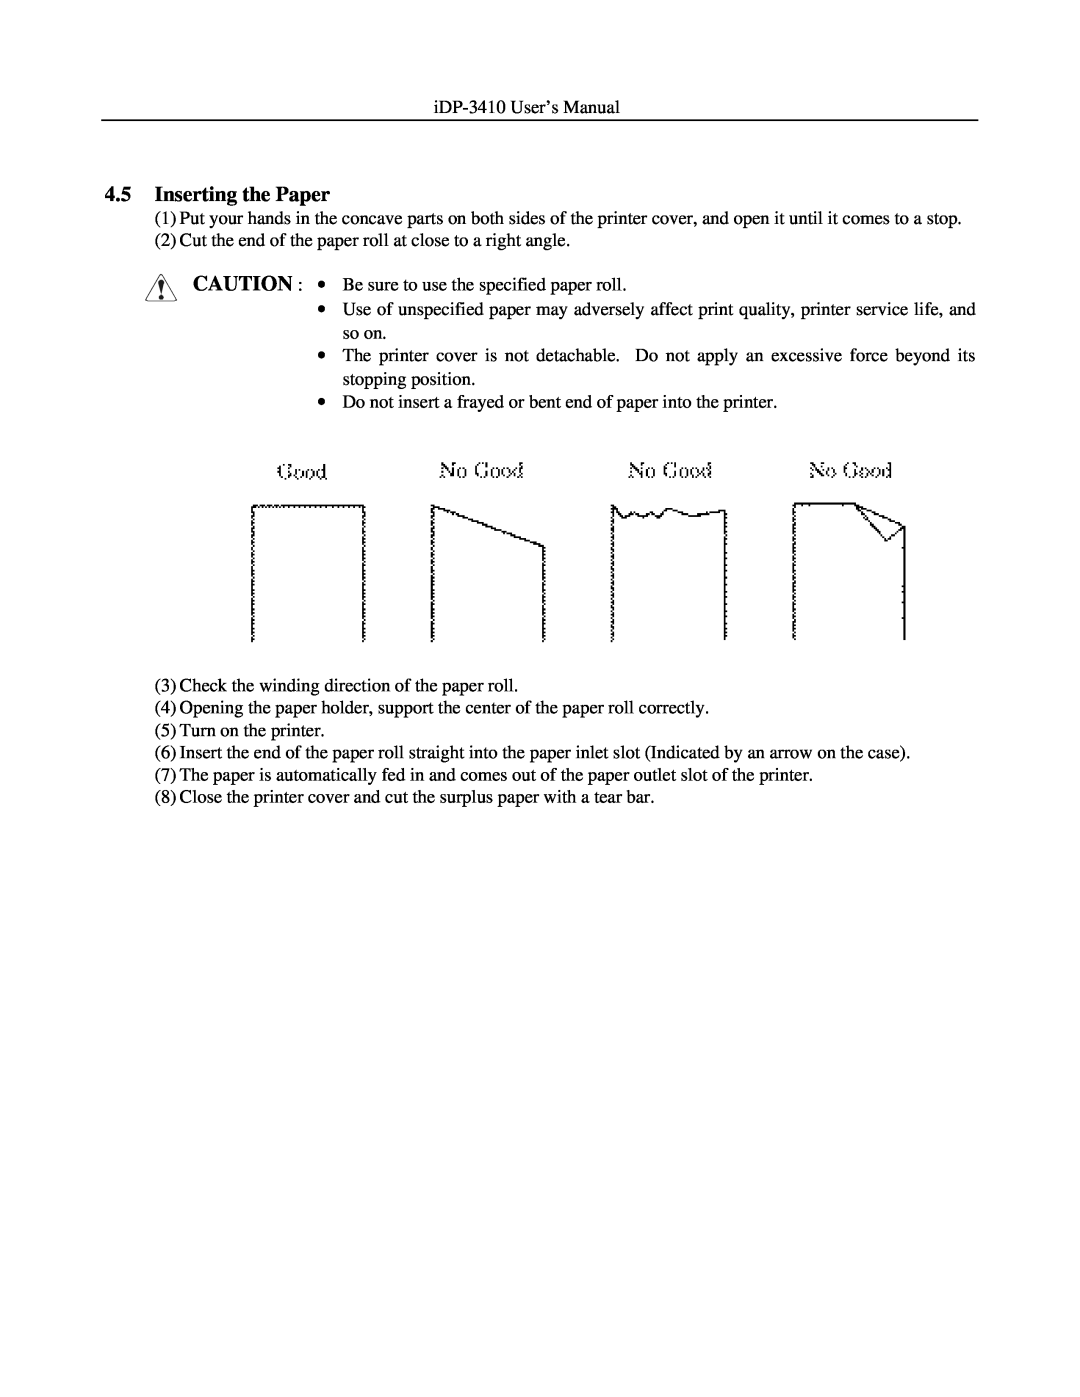 Addlogix iDP-3410 user manual Inserting the Paper 